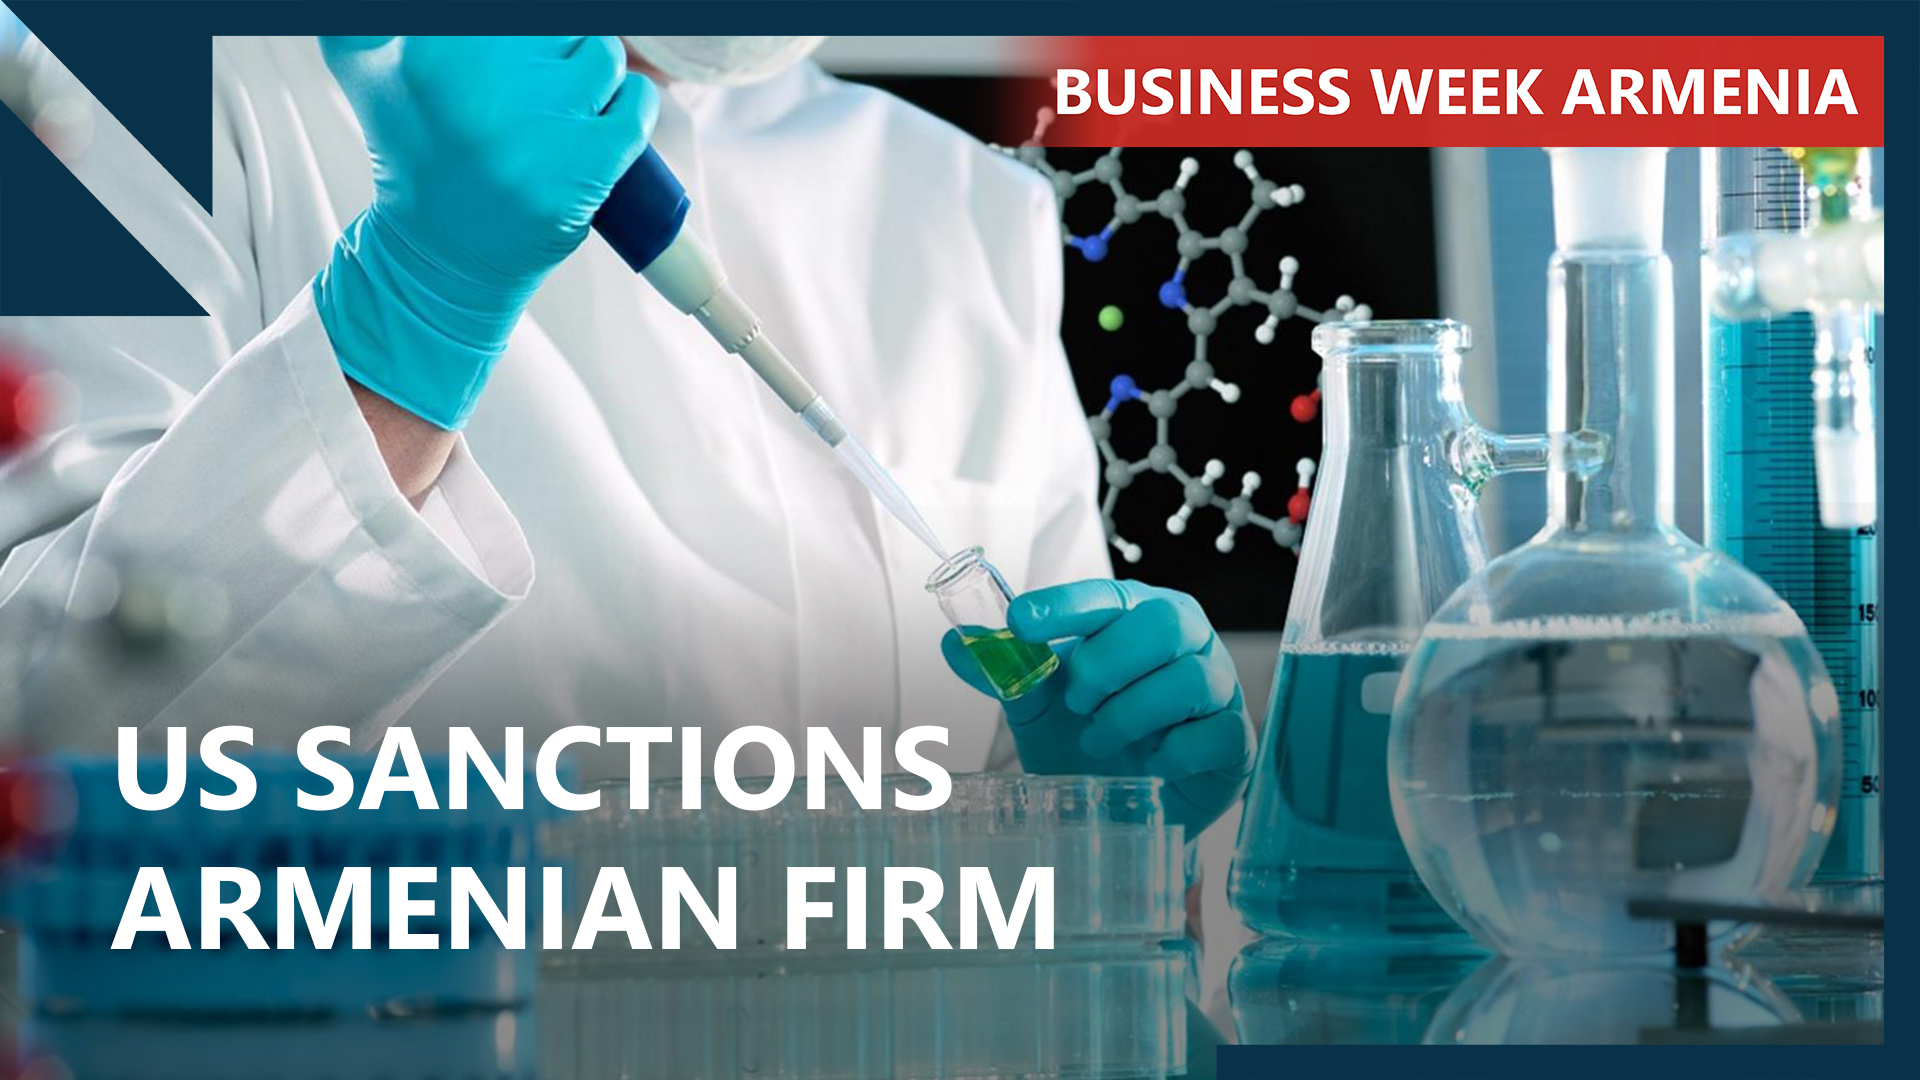 US blacklists Armenian chemical importer for Russia ties: Business Week Armenia